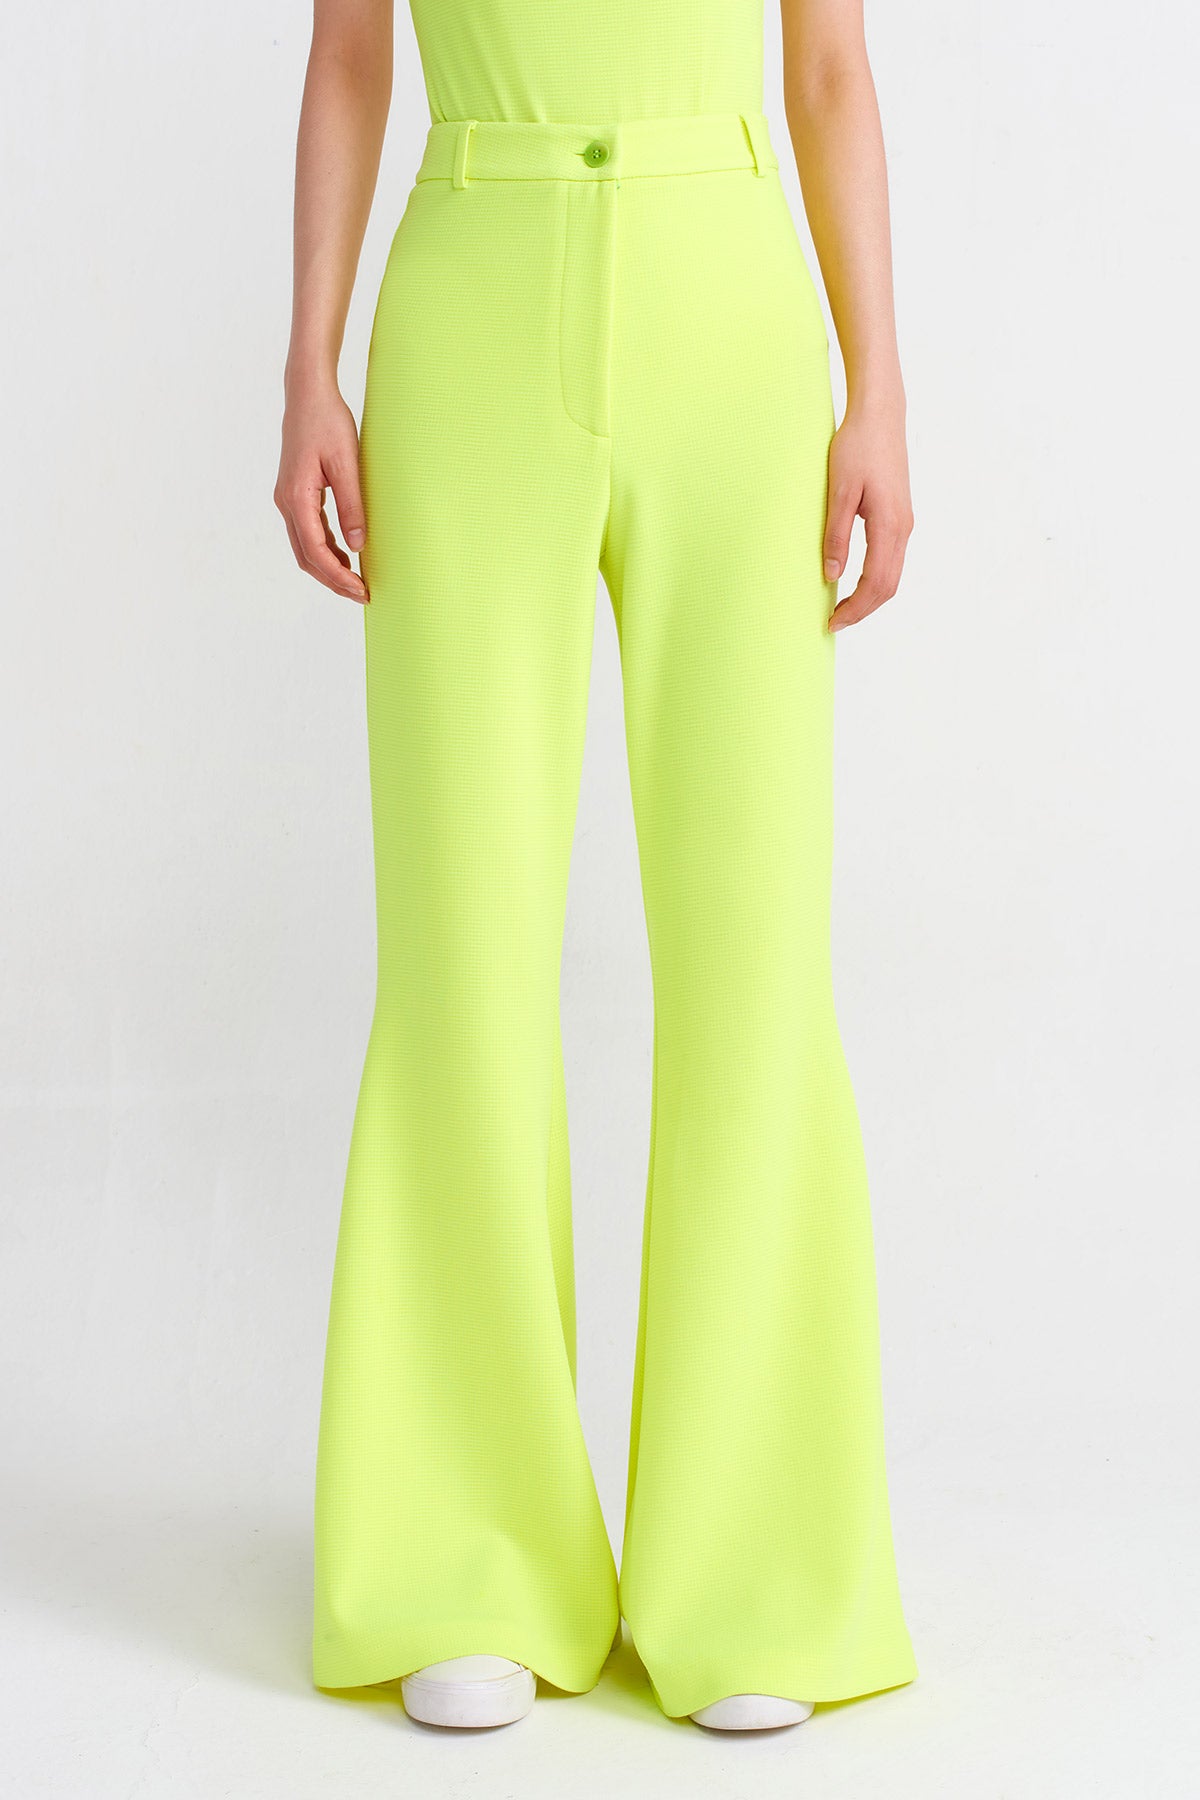 Neon Asit Yeşil İpanyol Paça Yüksel Bel Pantolon-Y243013059